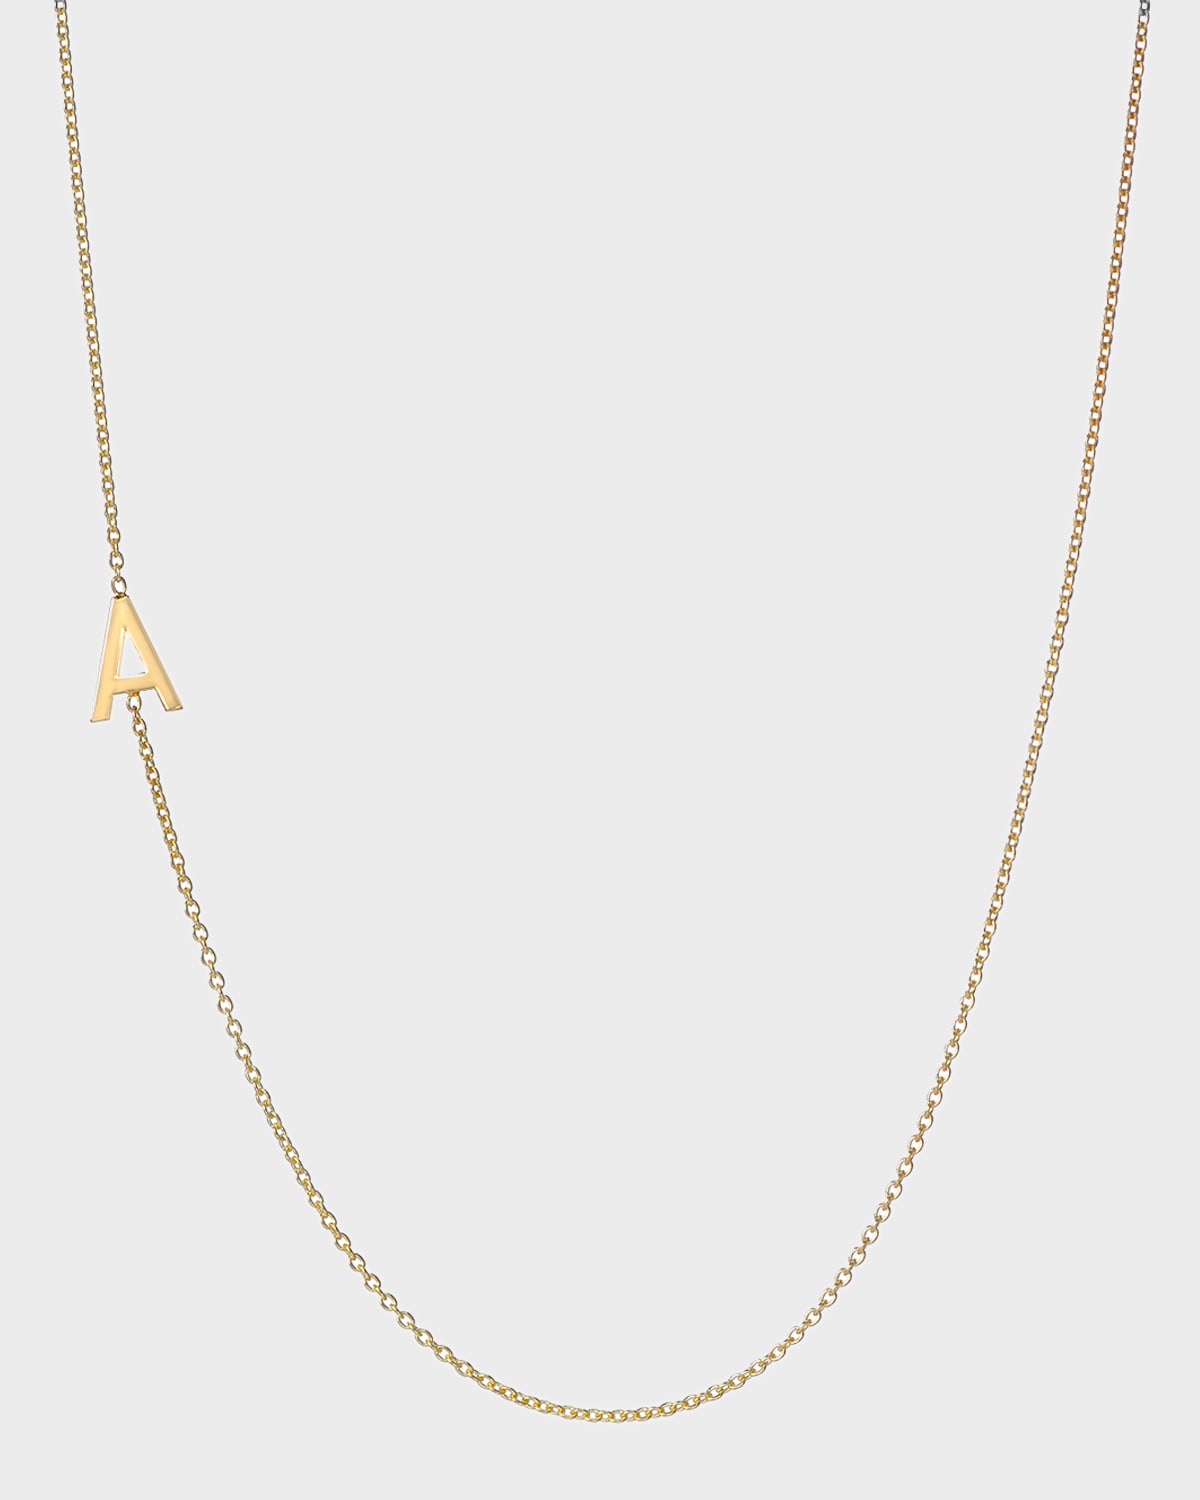 Zoe Lev Jewelry 14k Yellow Gold Personalized Asymmetric Initial Necklace